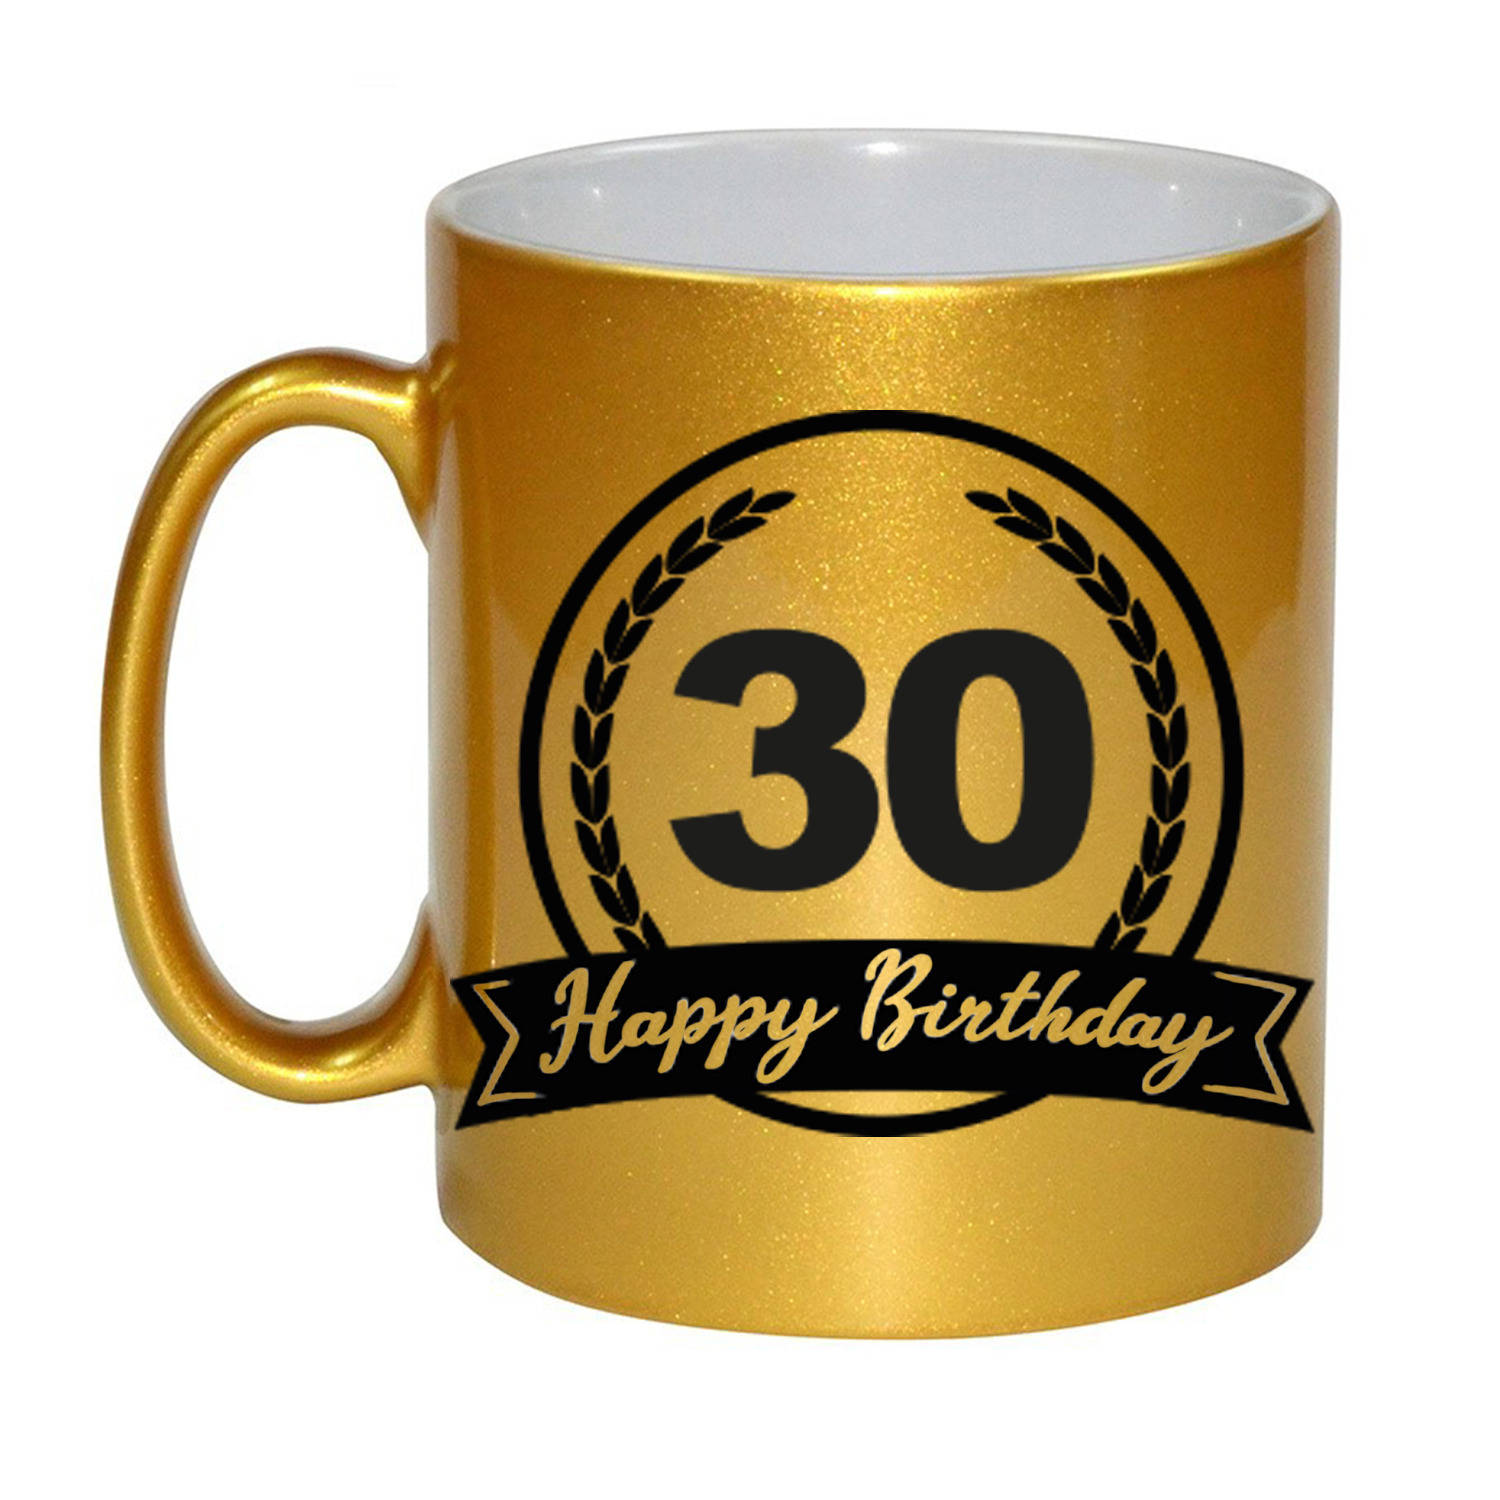 Happy Birthday 30 years gouden cadeau mok / beker met wimpel 330 ml